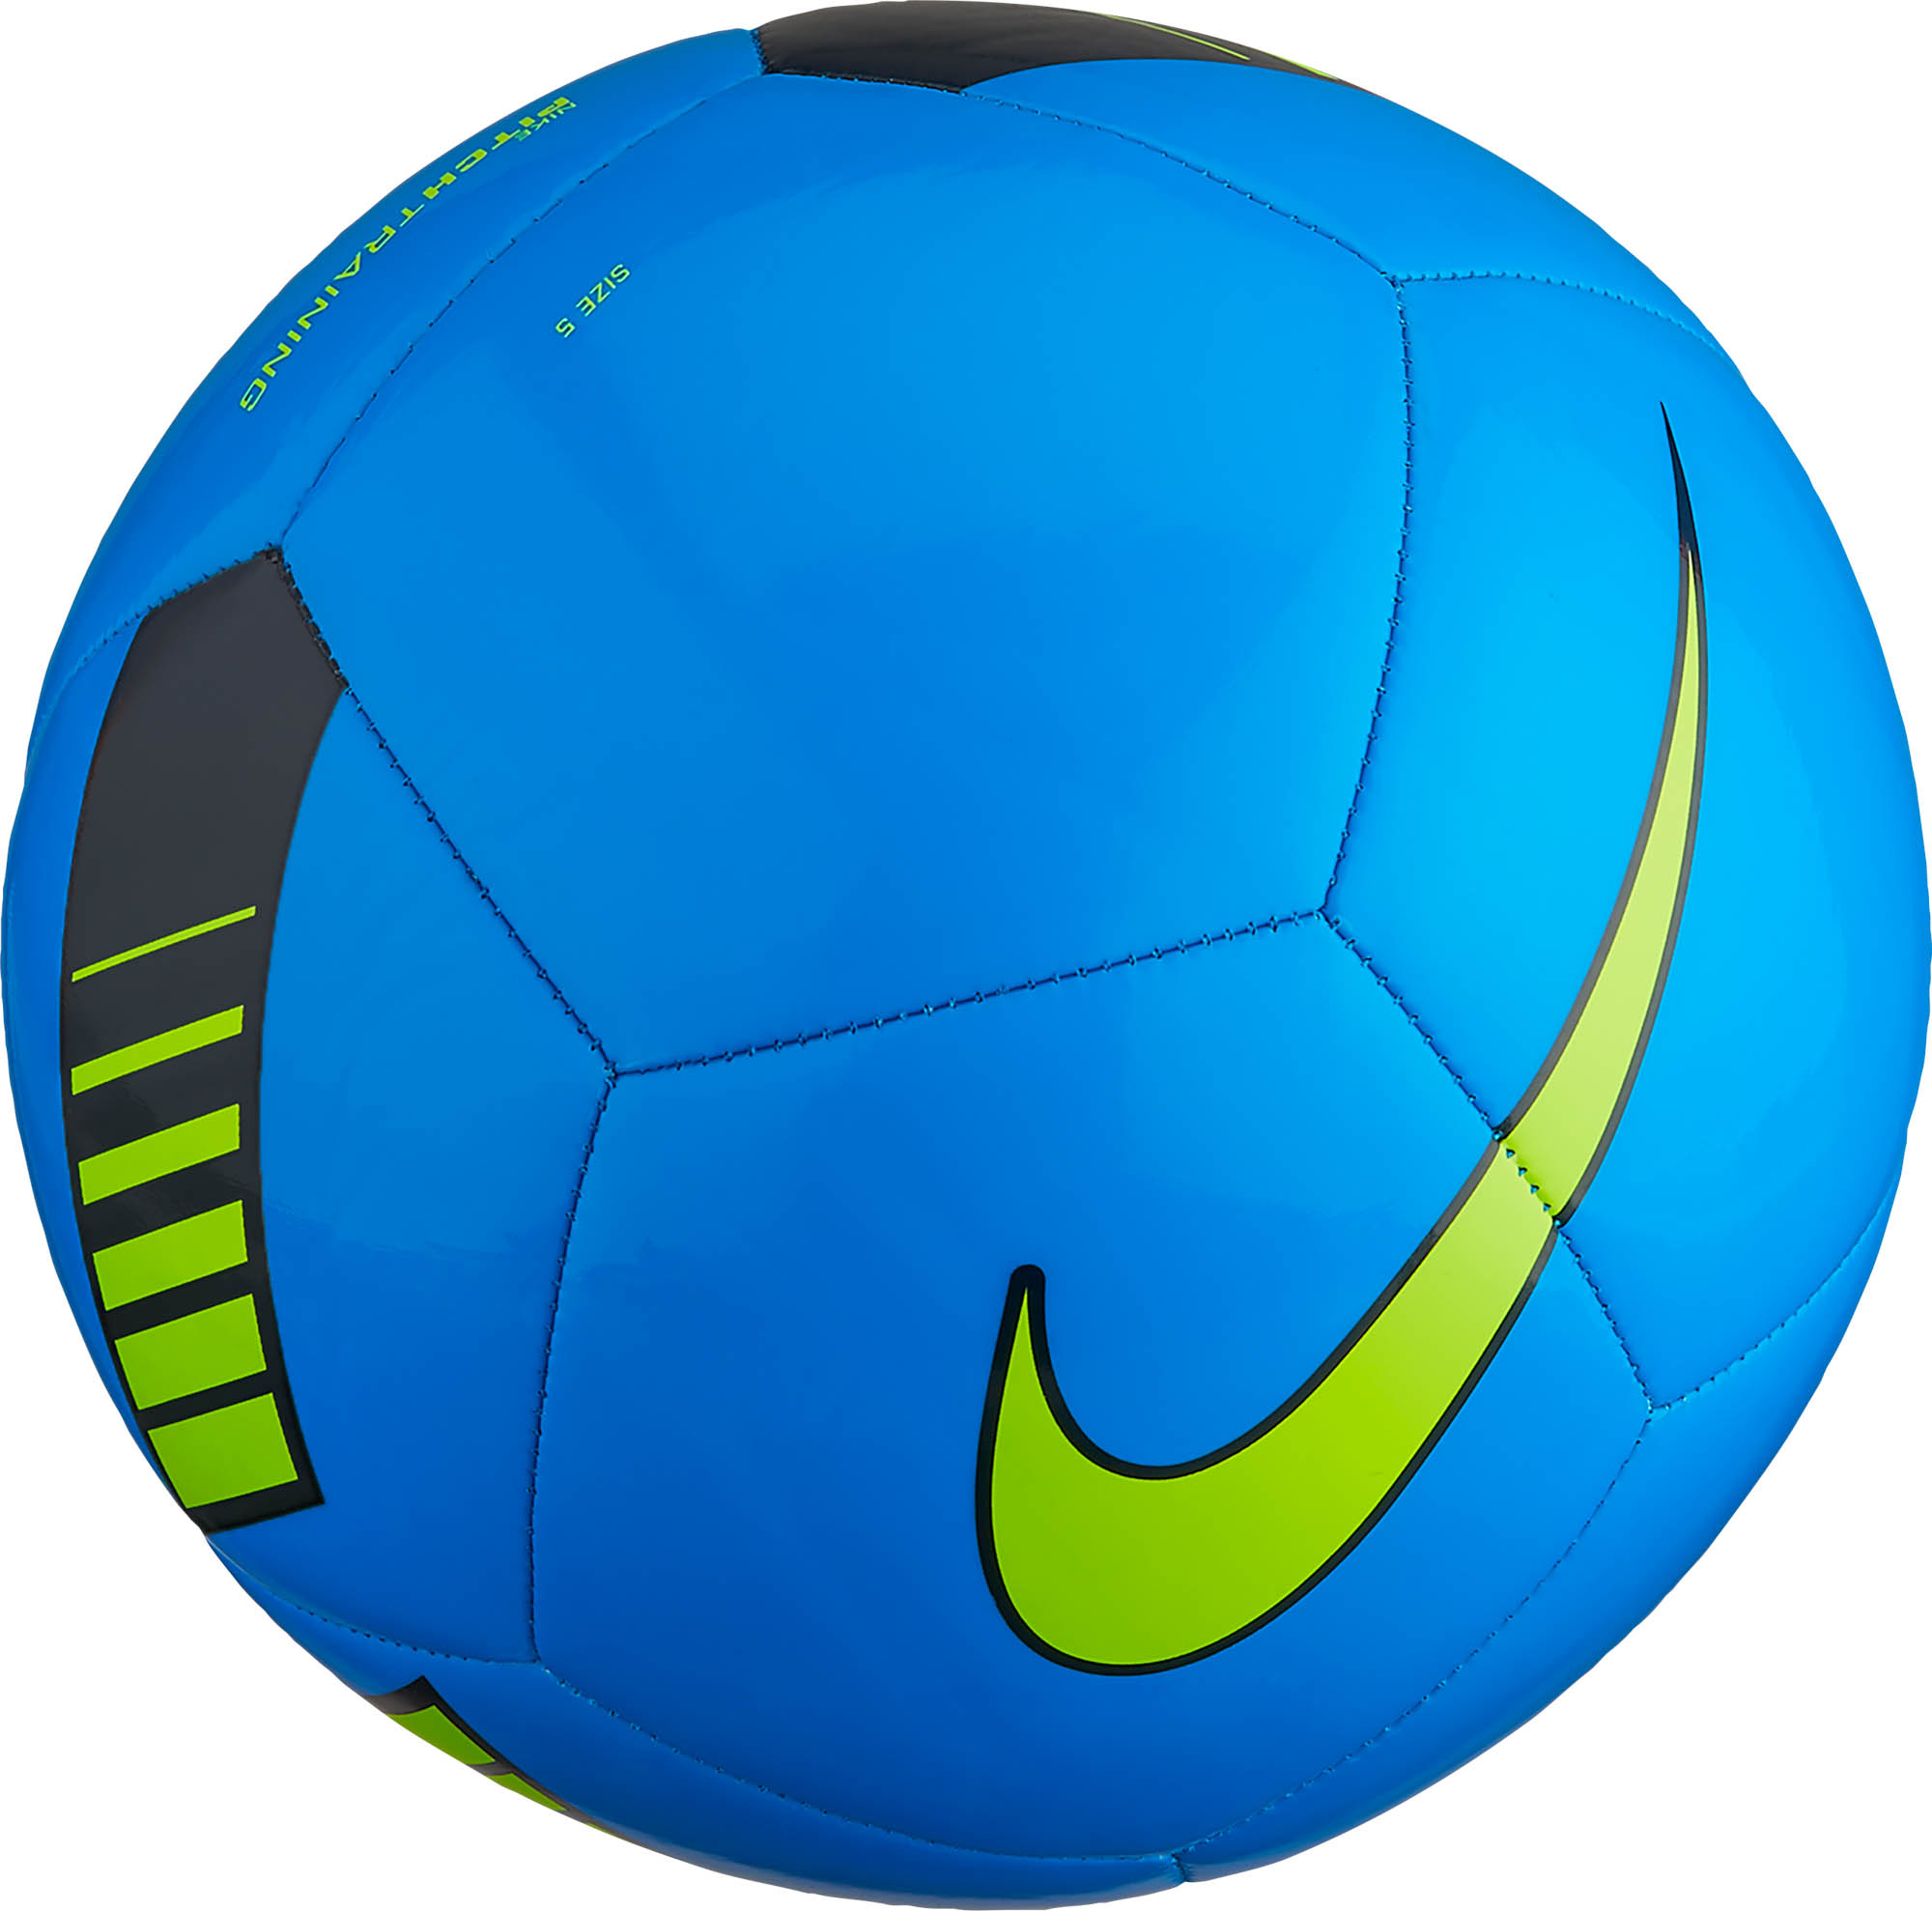 nike pitch soccer ball size 4